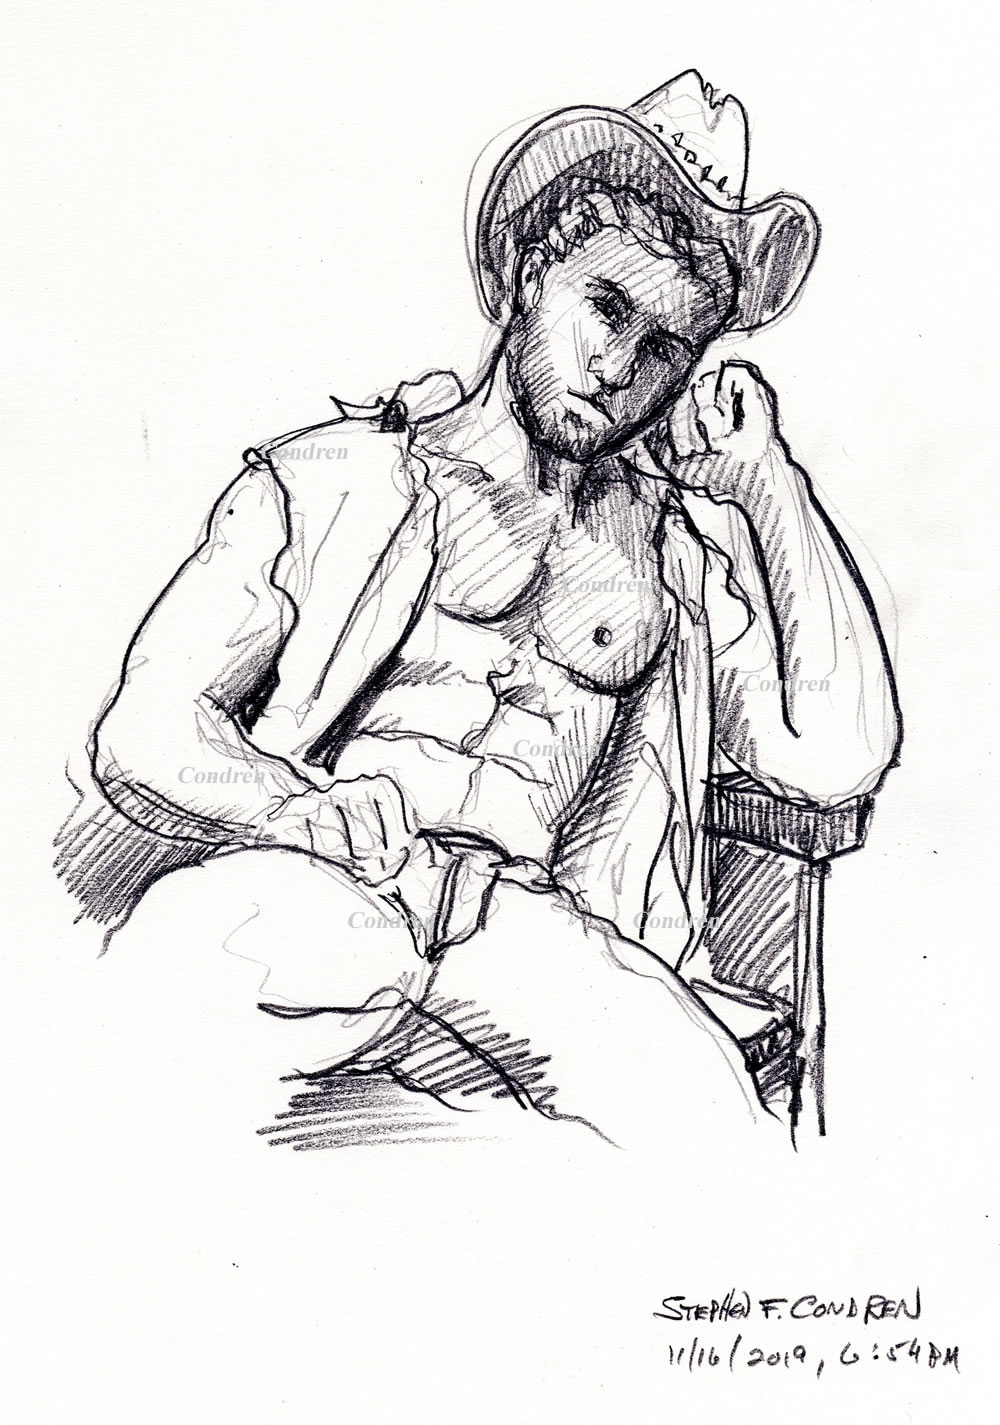 Hot shirtless cowboy #354Z pencil figure drawing by artist Stephen F. Condren.